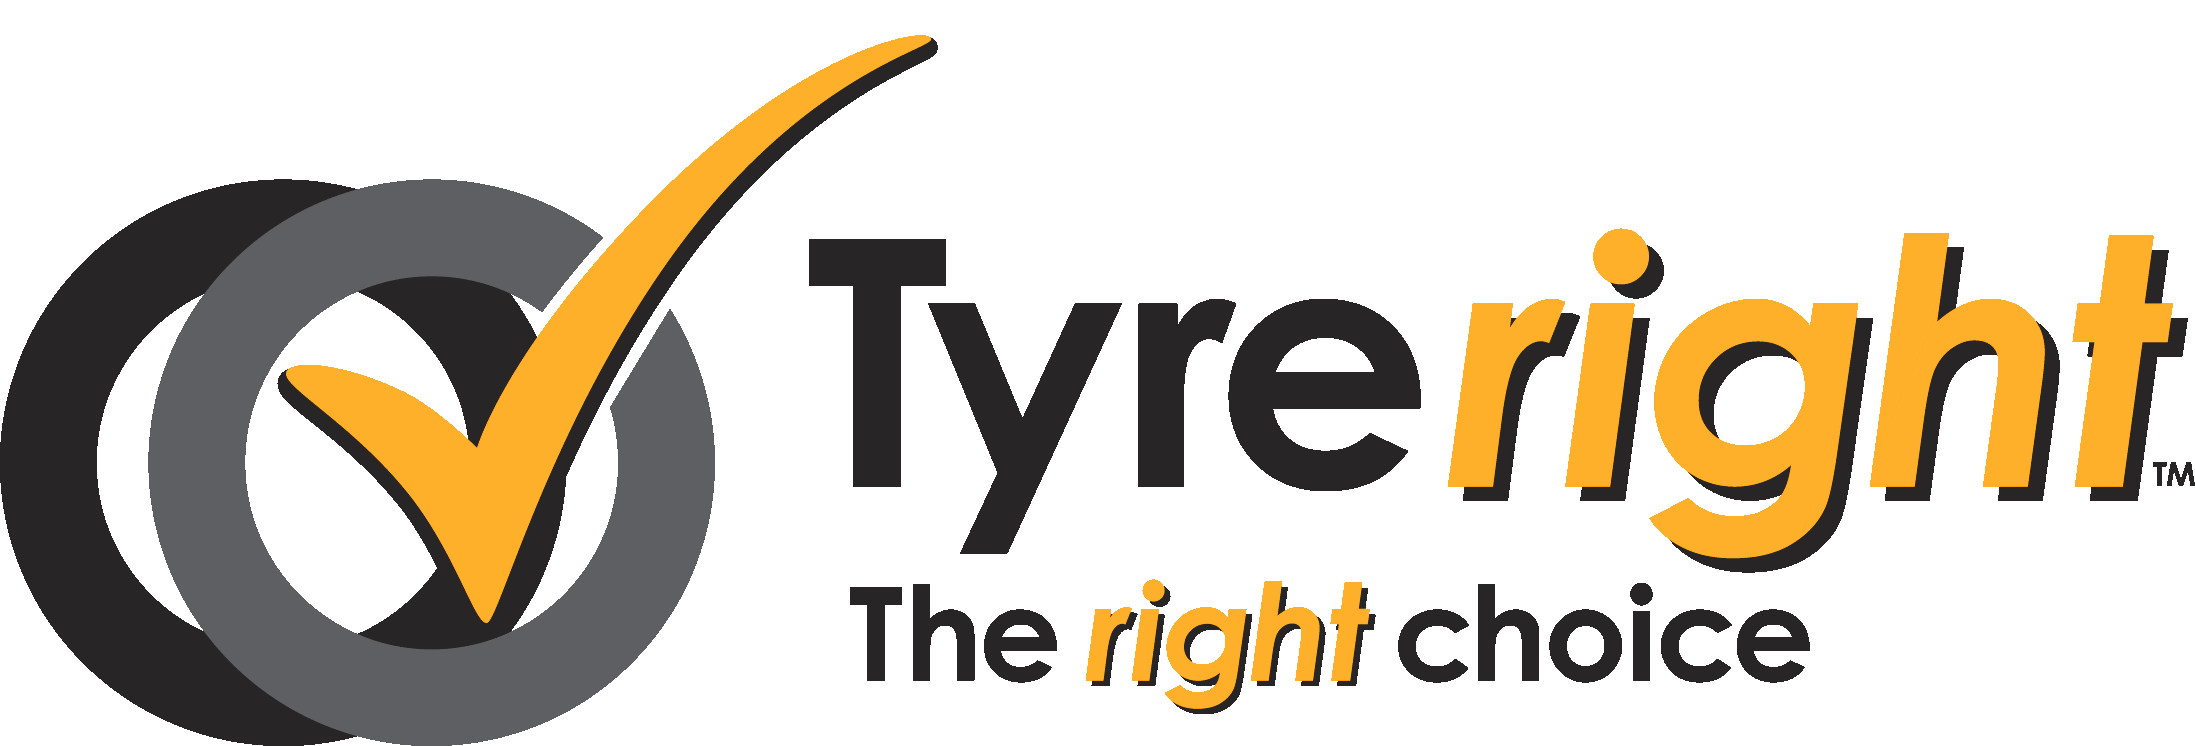 Right Logo - Tyre right logo - Josh Boettcher